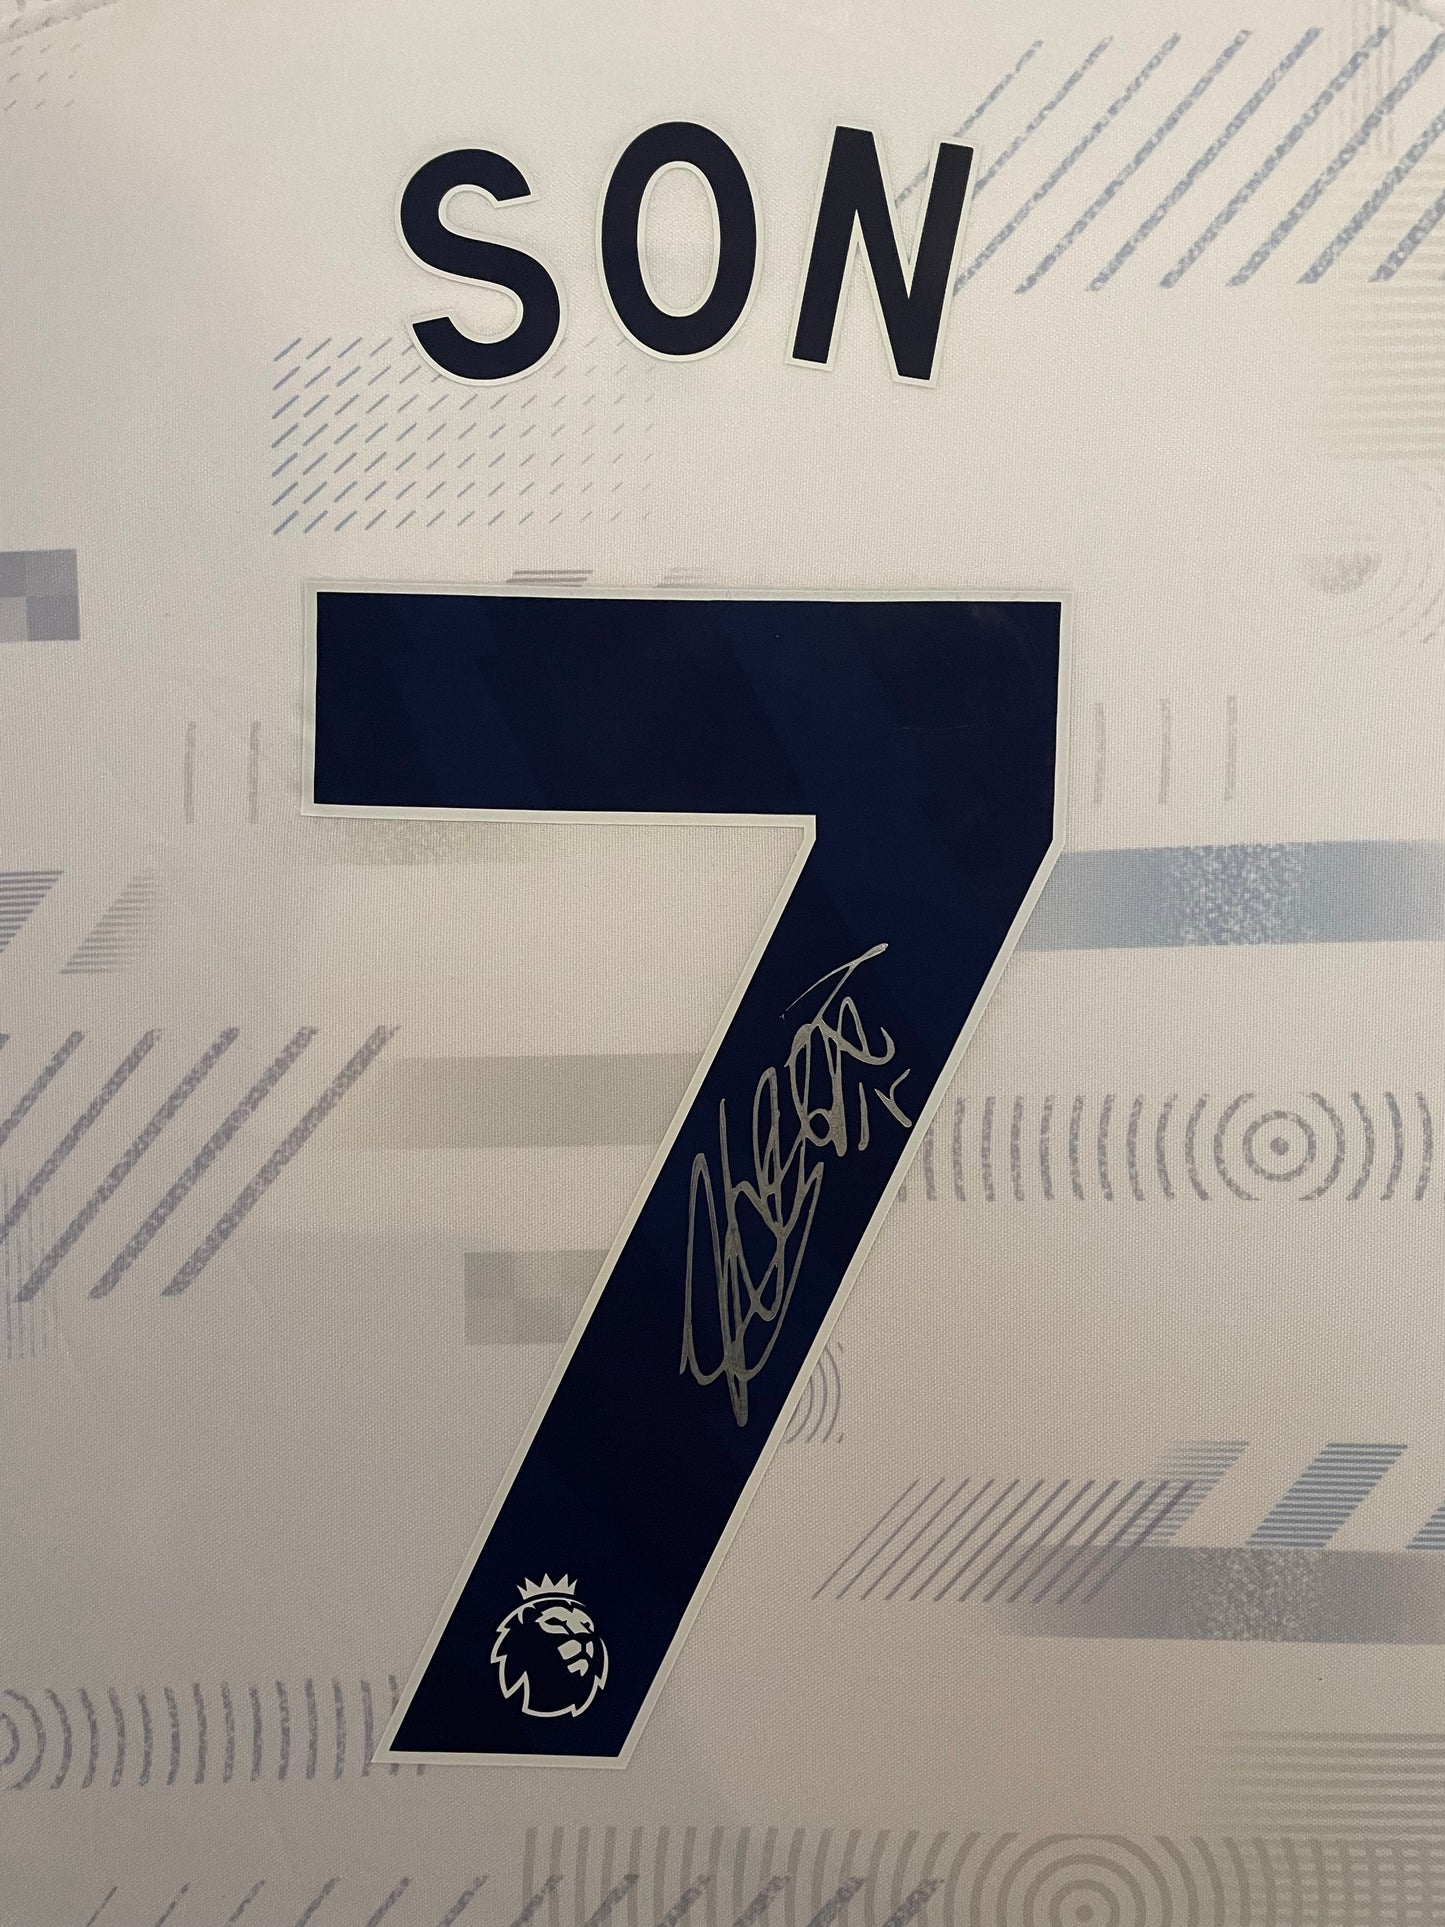 Son Heung-min Signed Tottenham 2023/24 Framed Home Shirt with COA